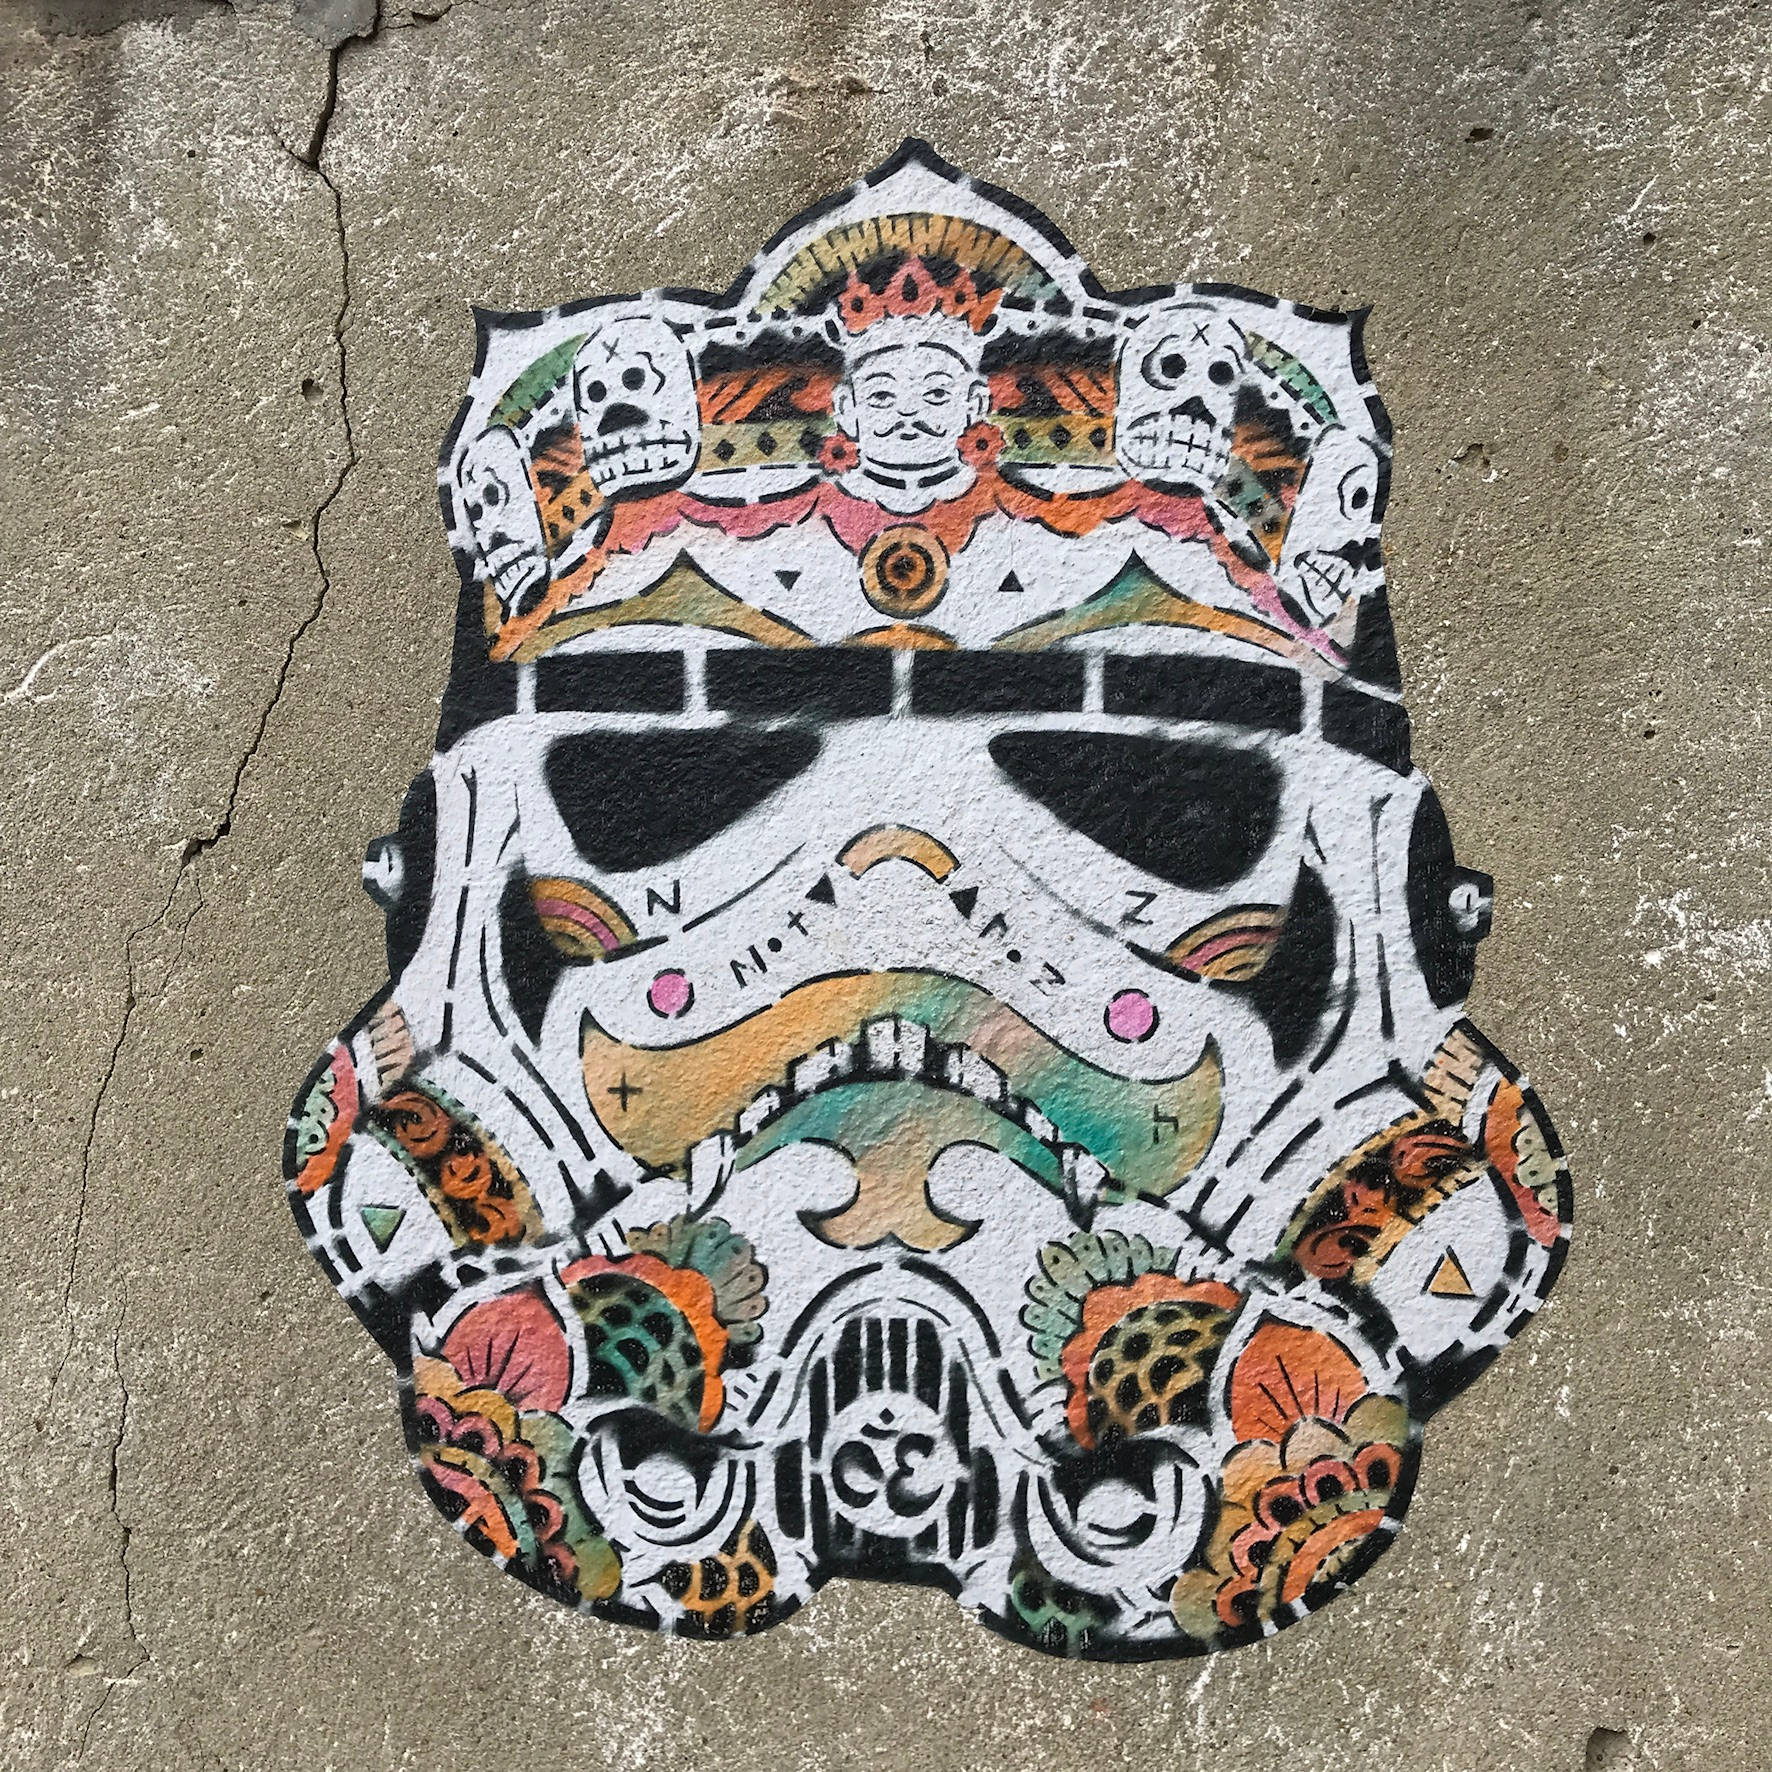 Star Wars Stormtrooper Wall Mural Background